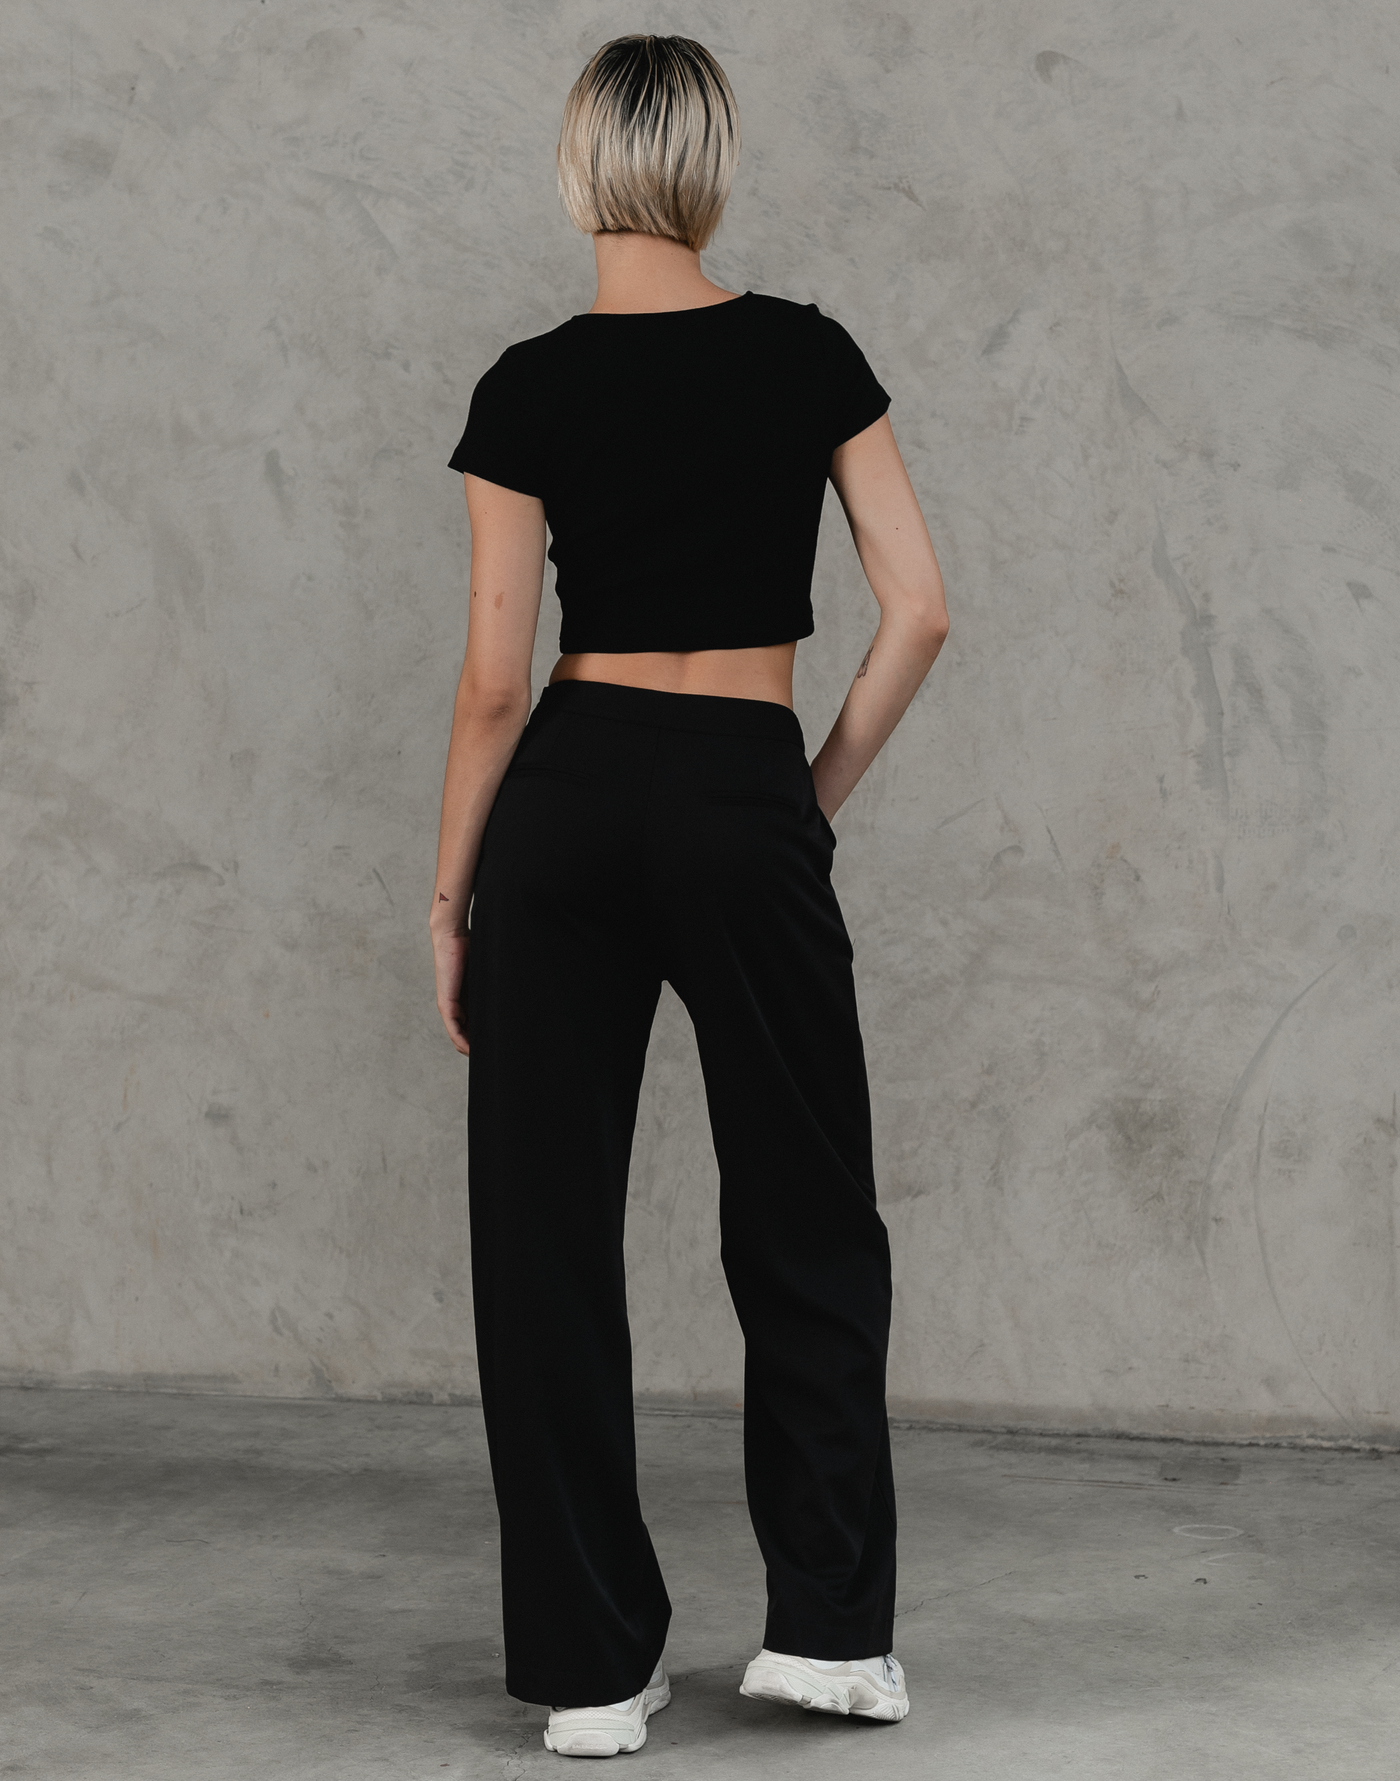 Cartea Pants (Black) - Wide Leg Pants - Women's Pant - Charcoal Clothing